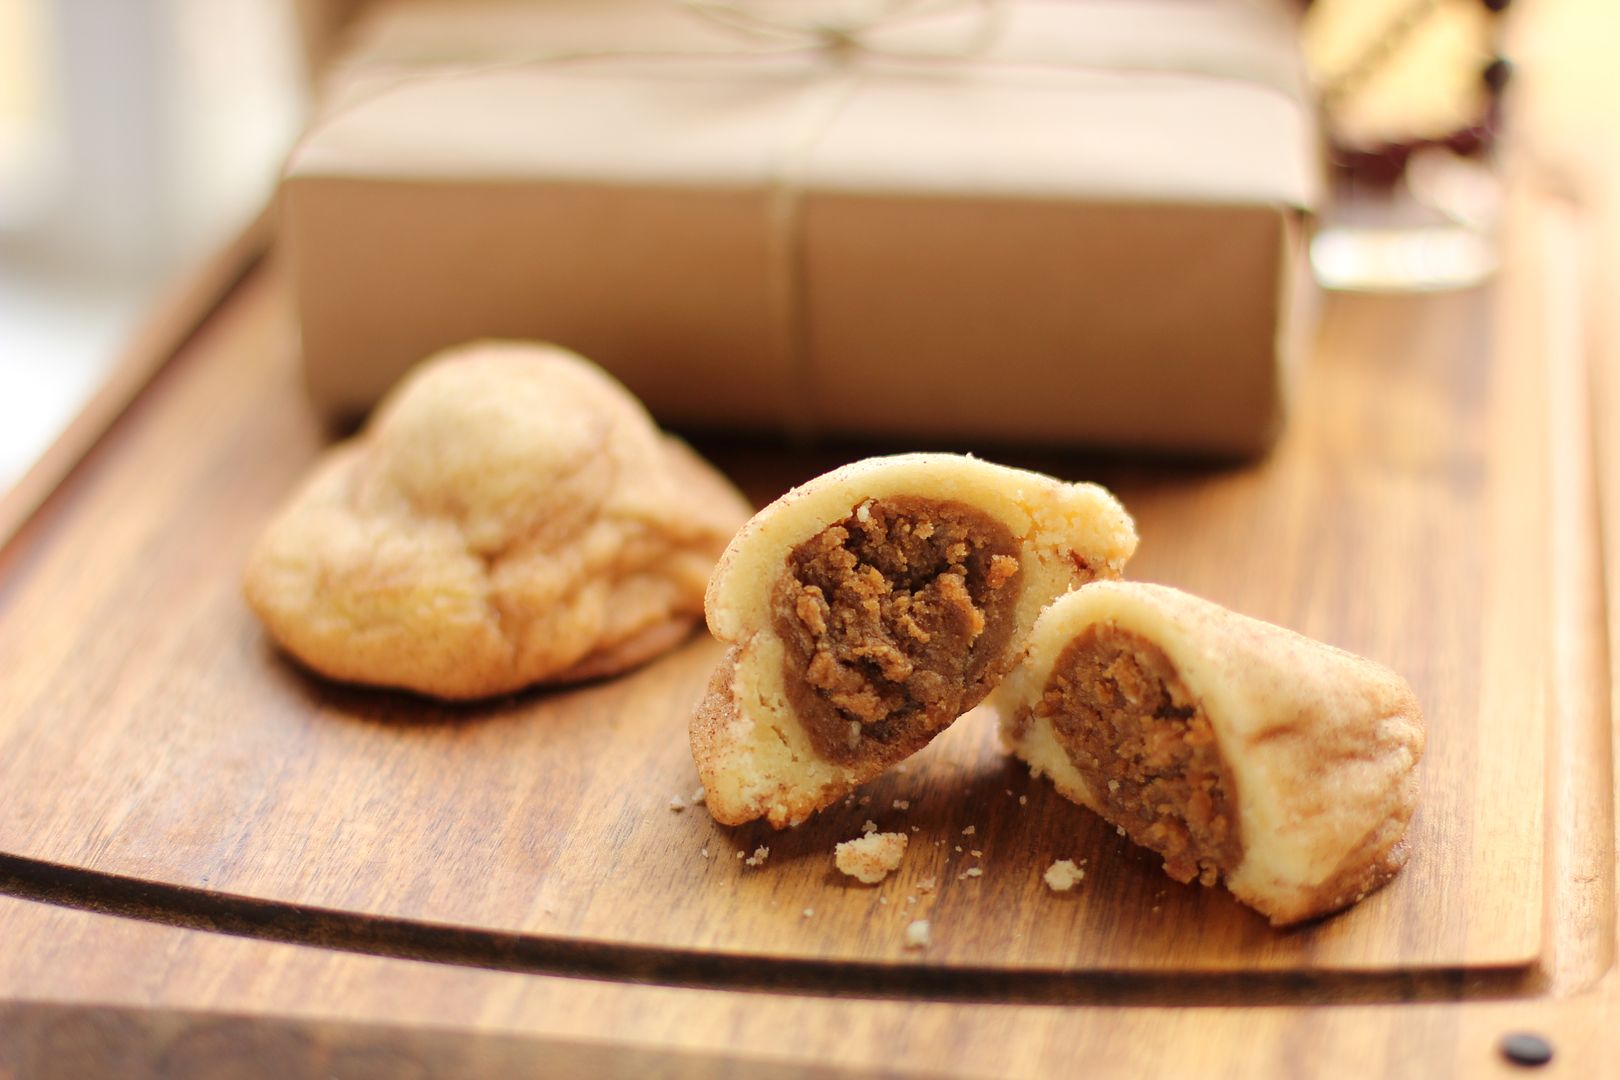 gngersnap stuffed snickerdoodle recipe from willowbird baking | cool mom picks